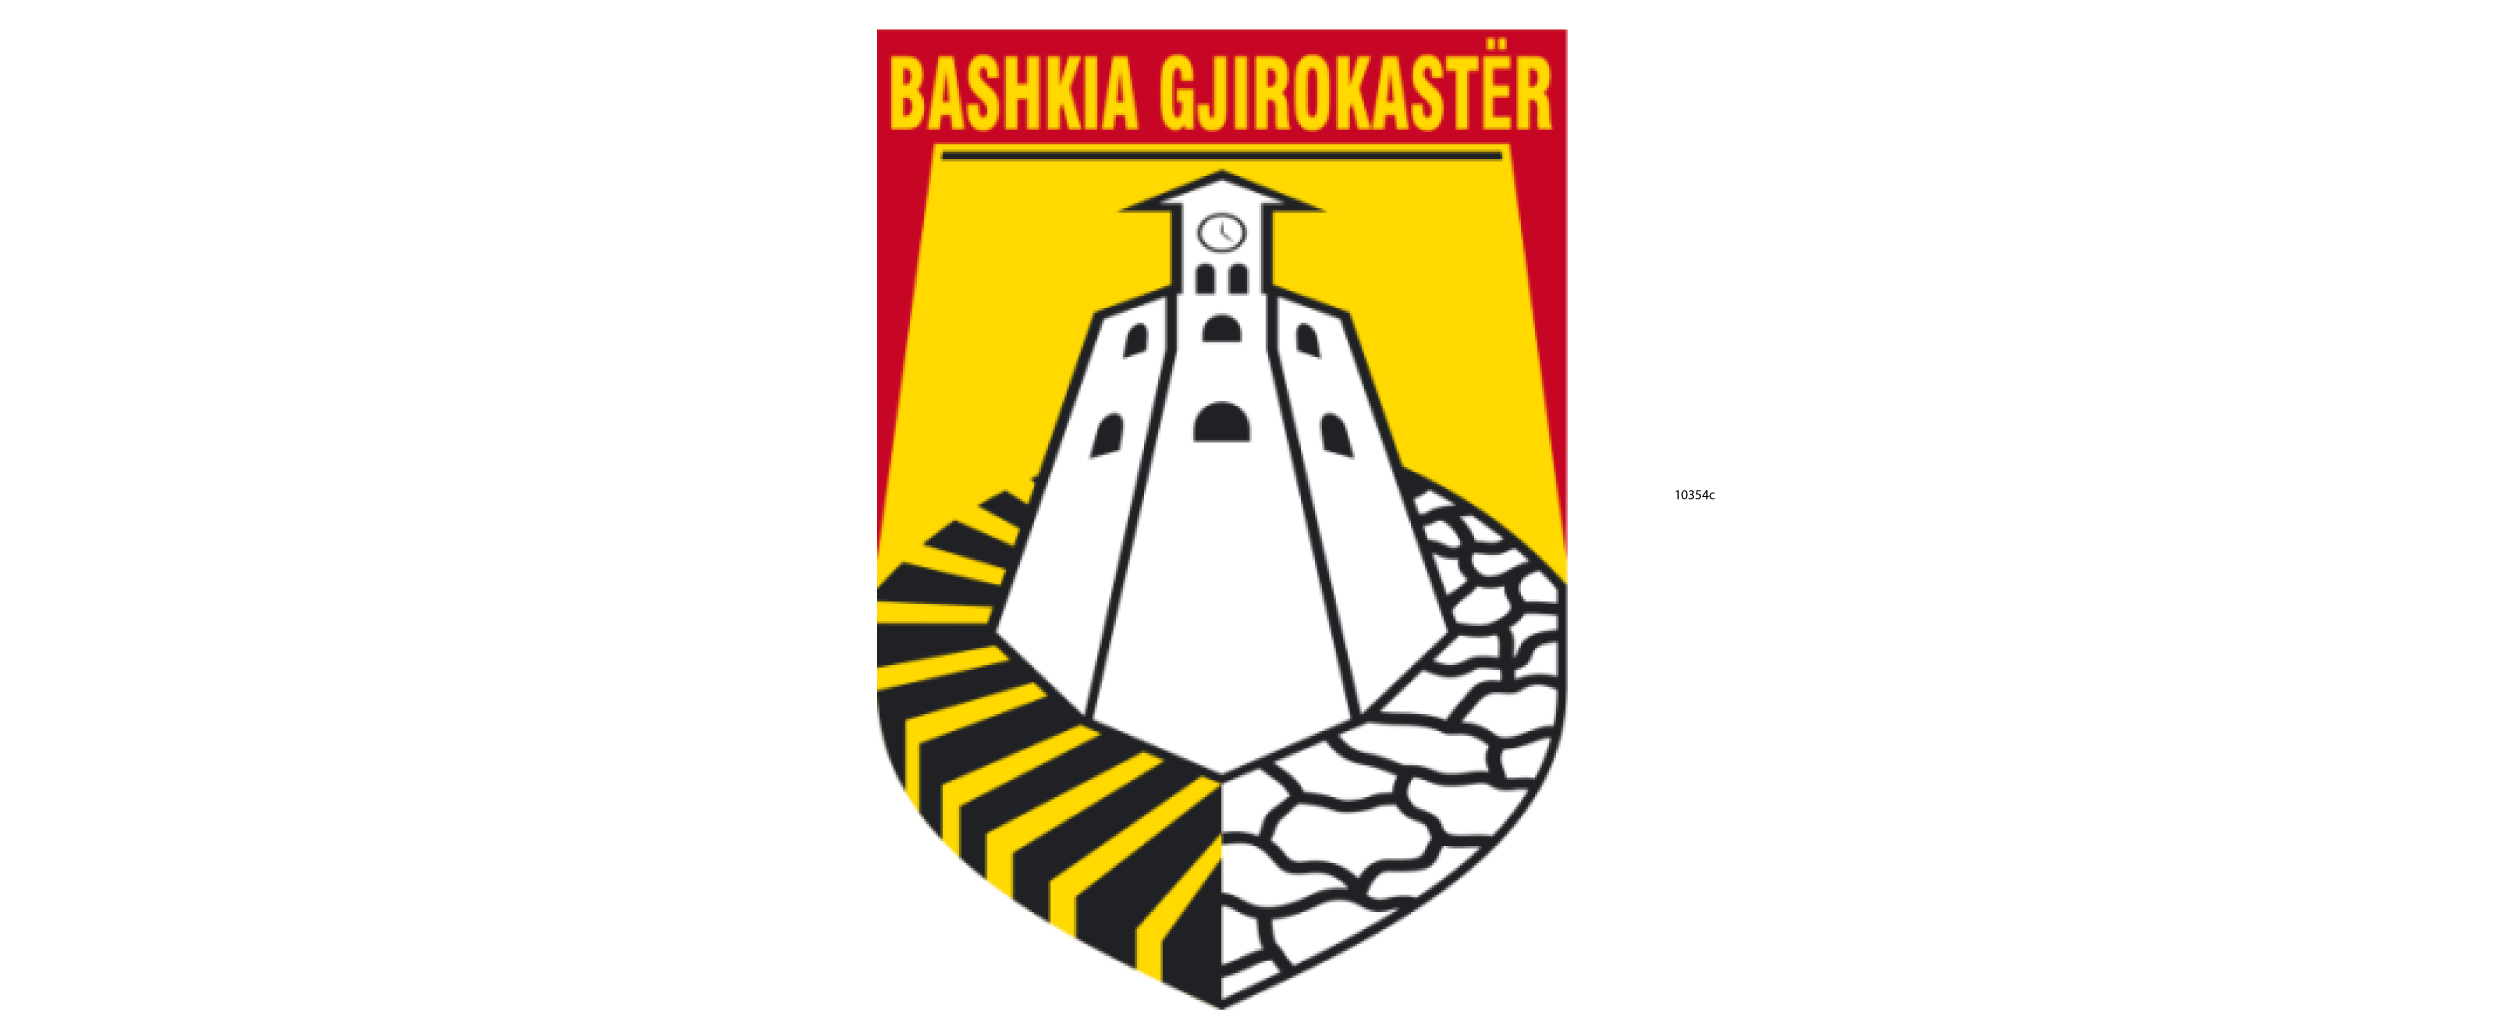 Bashkia Gjirokaster